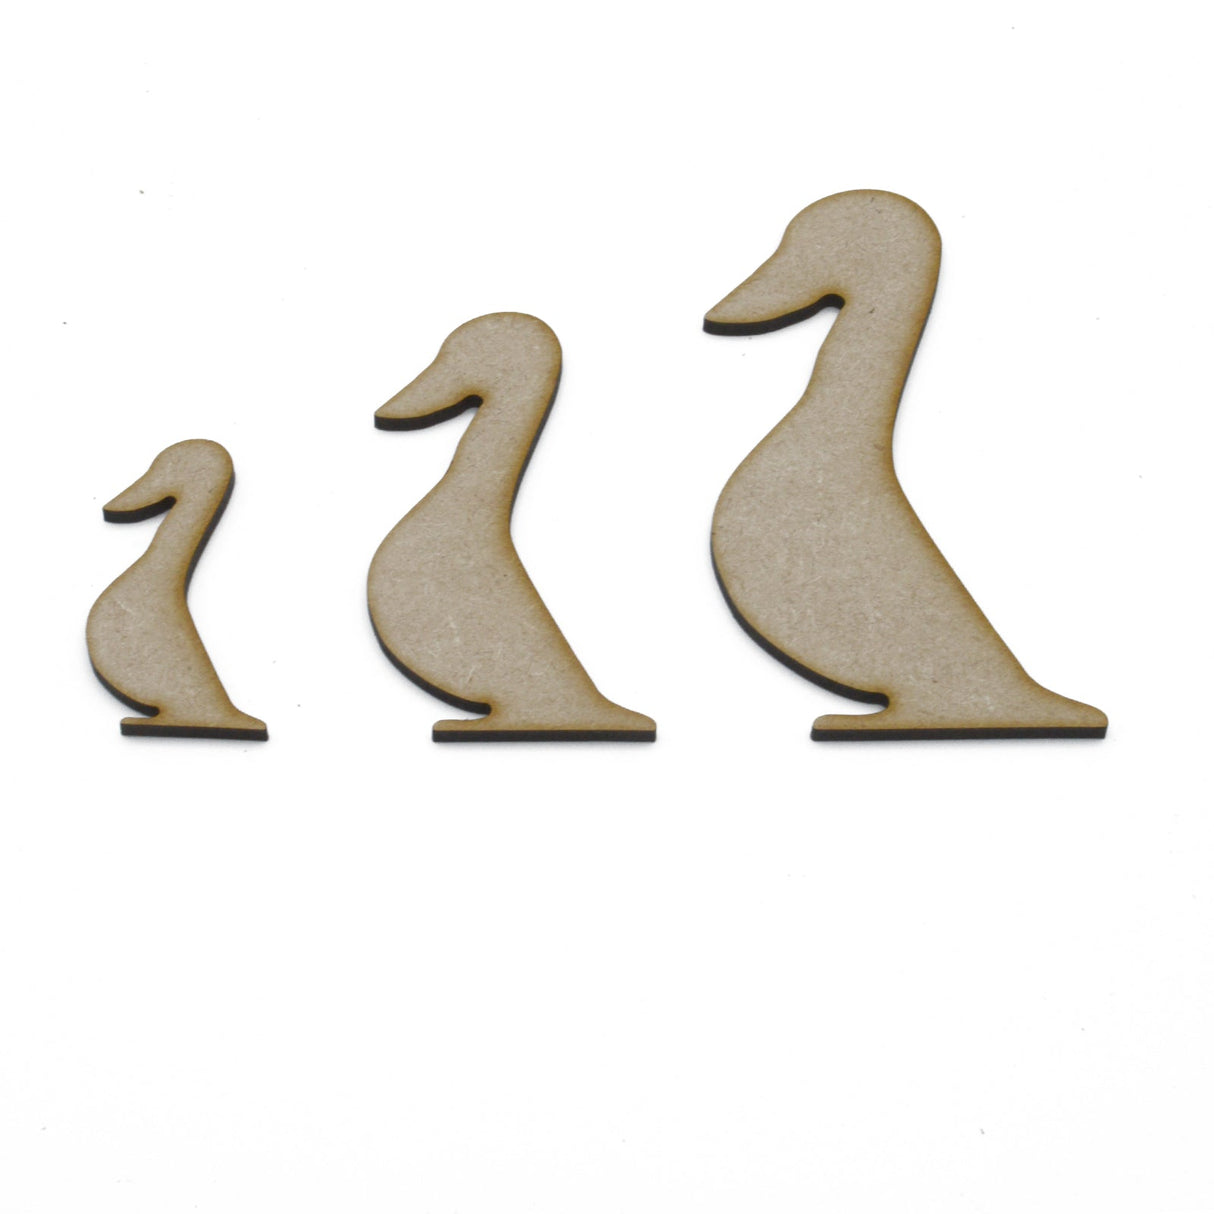 Wooden Duck Mdf Craft Shapes - Laserworksuk